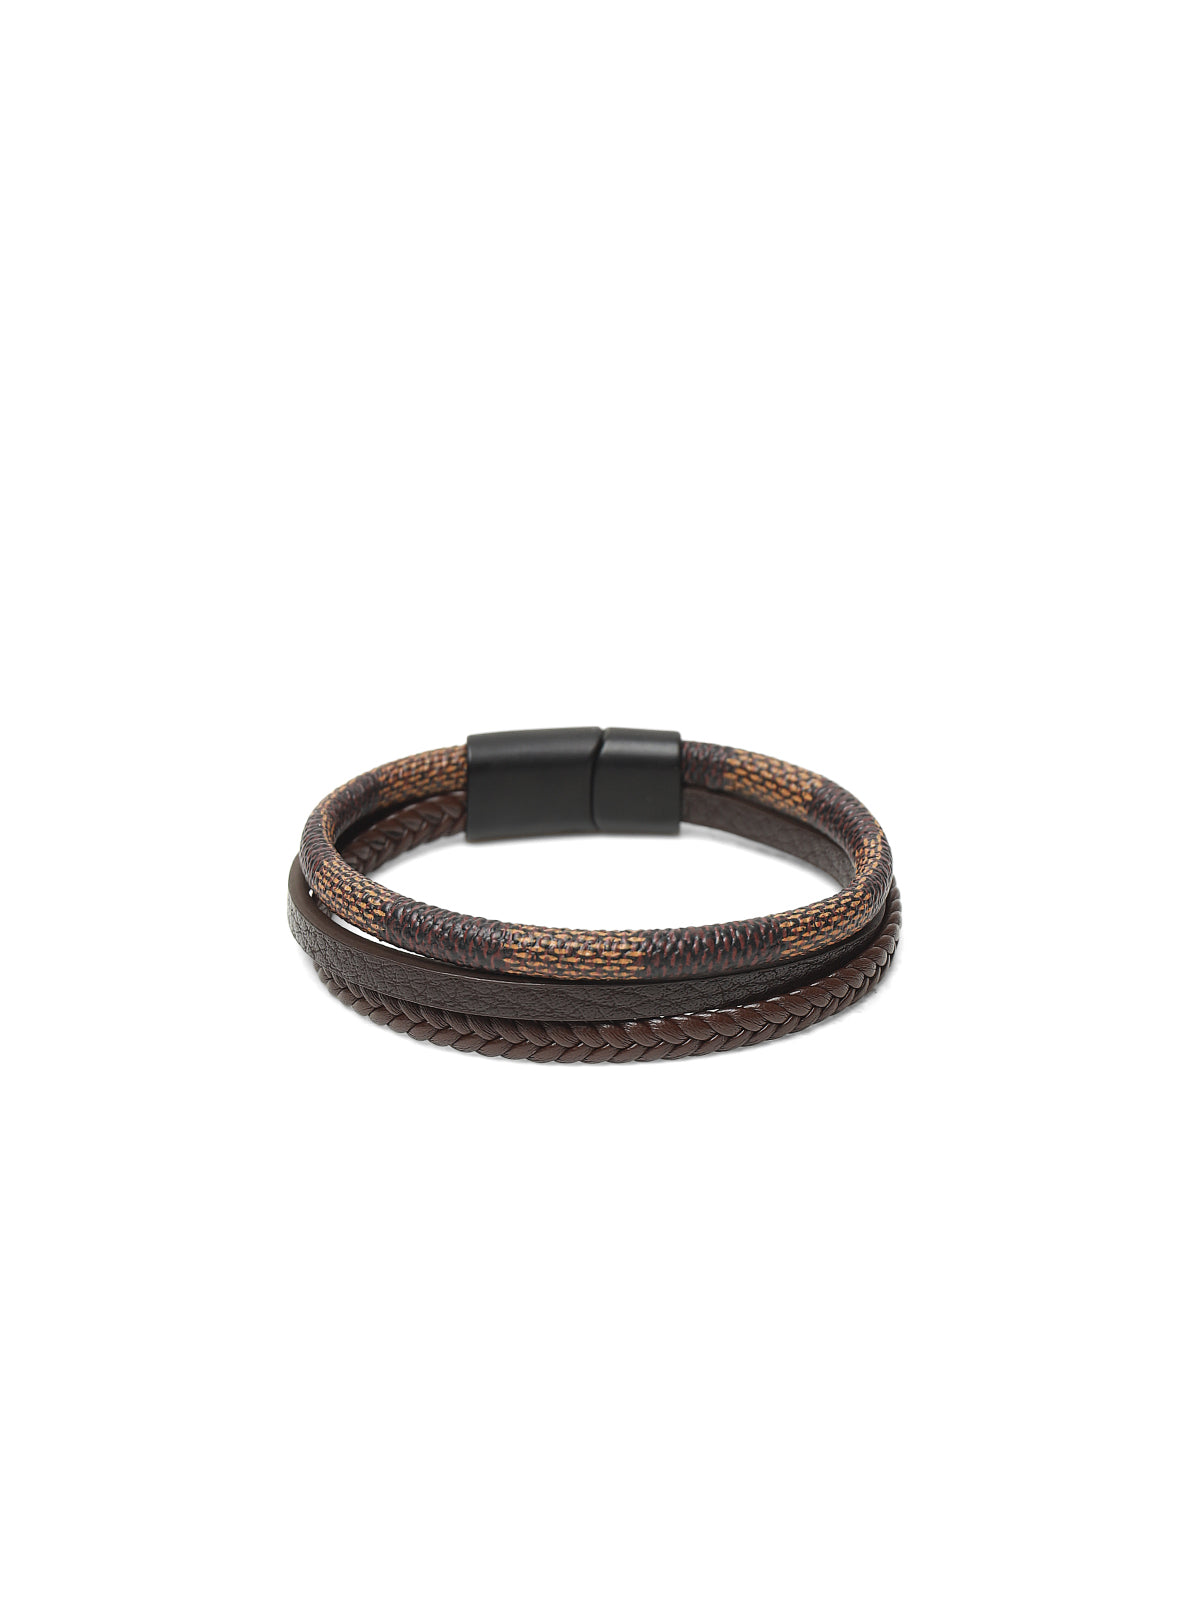 Brown Leather Bracelet - FABR24-016